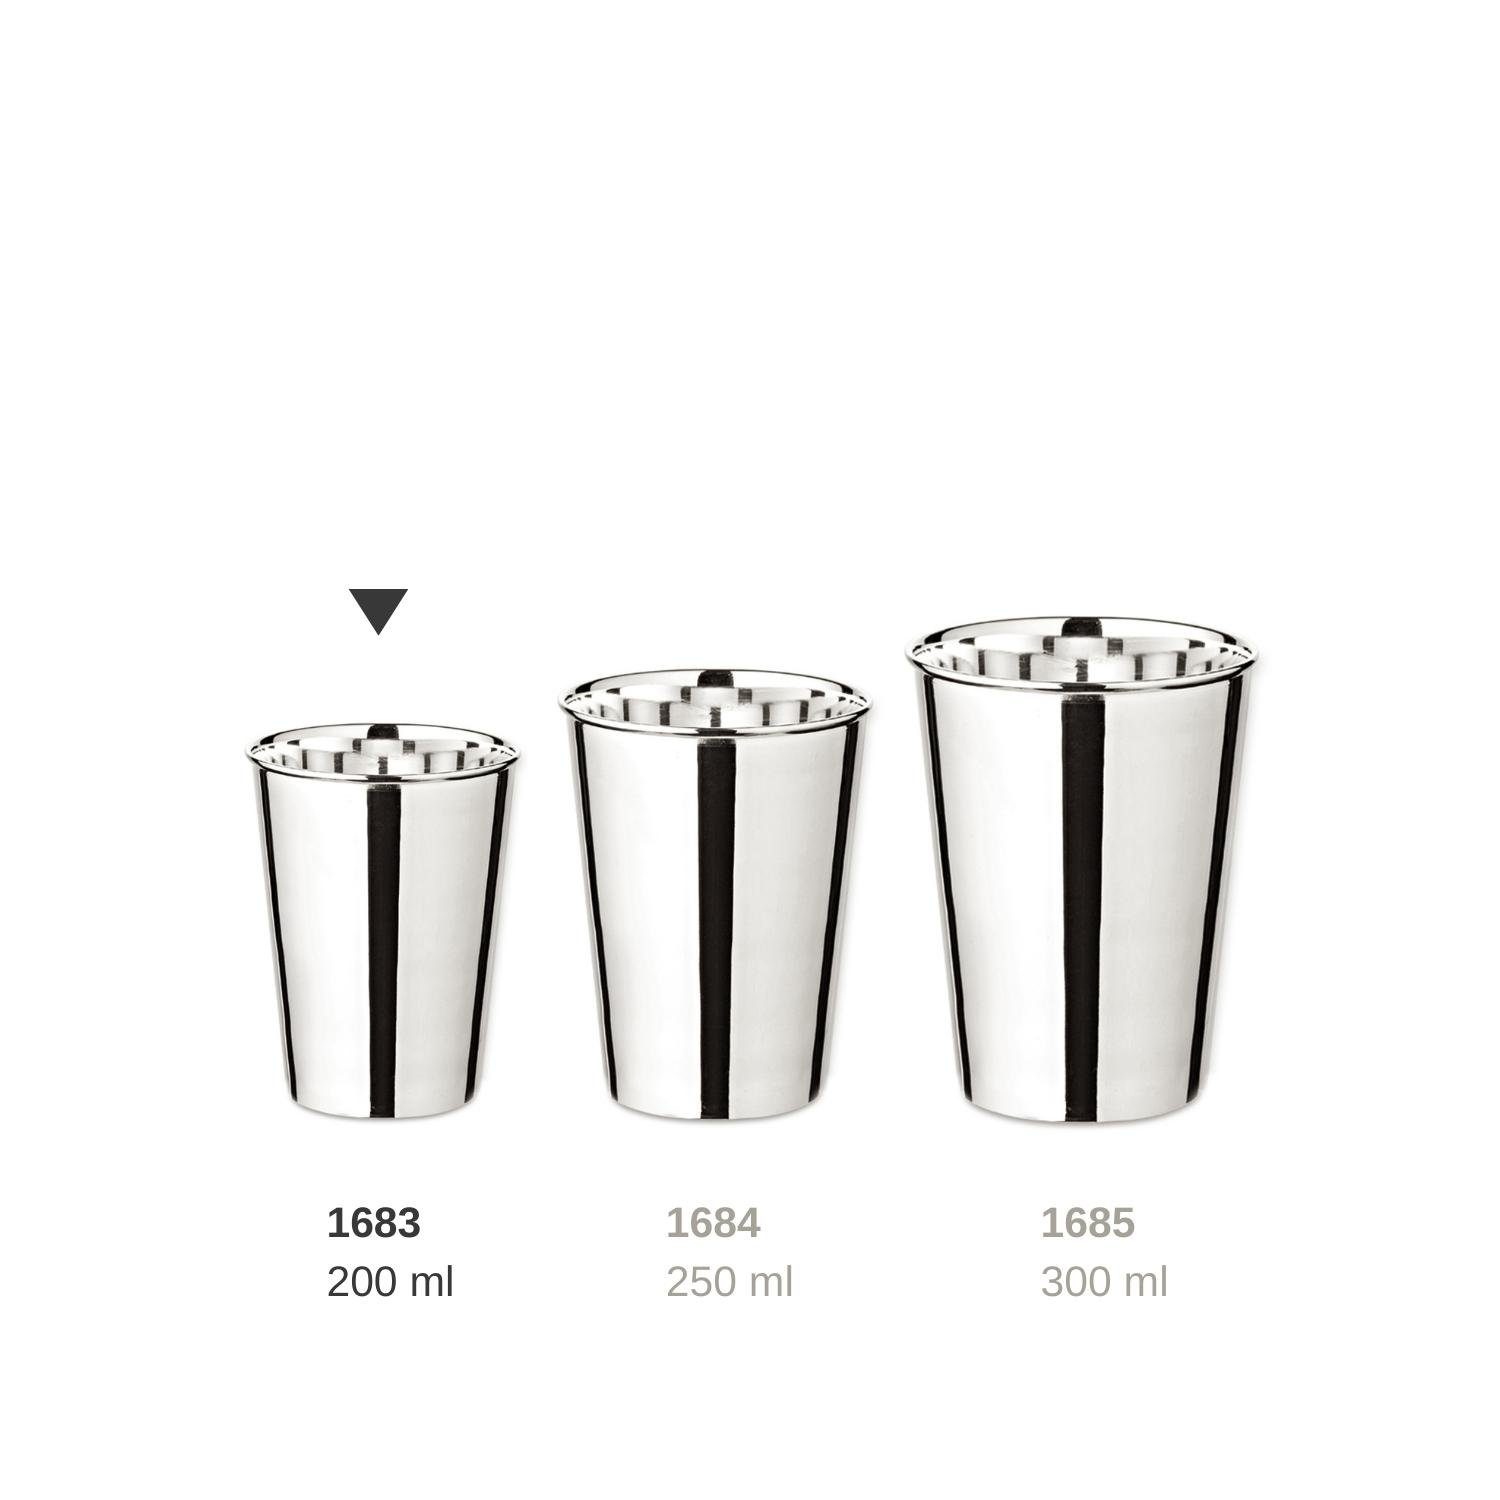 EDZARD Becher Design, Messing, gravurfähig, 200 ml Konus, im Trinkbecher cleanen schwerversilbert, Silber-Optik, Vase mit